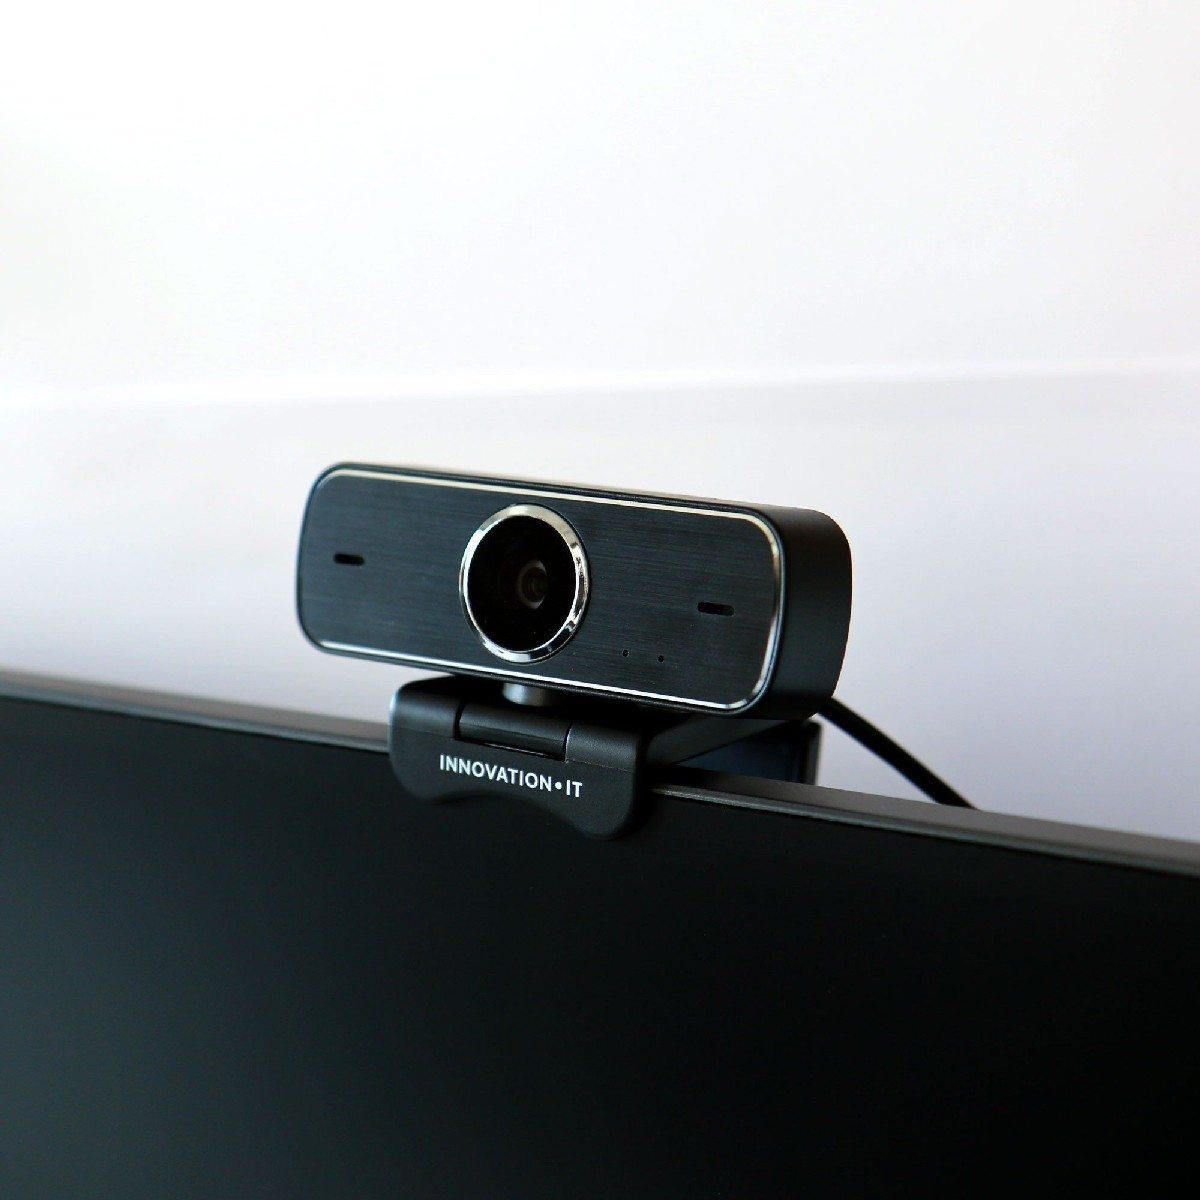 Webcam Innovation IT C1096 HD 1080p